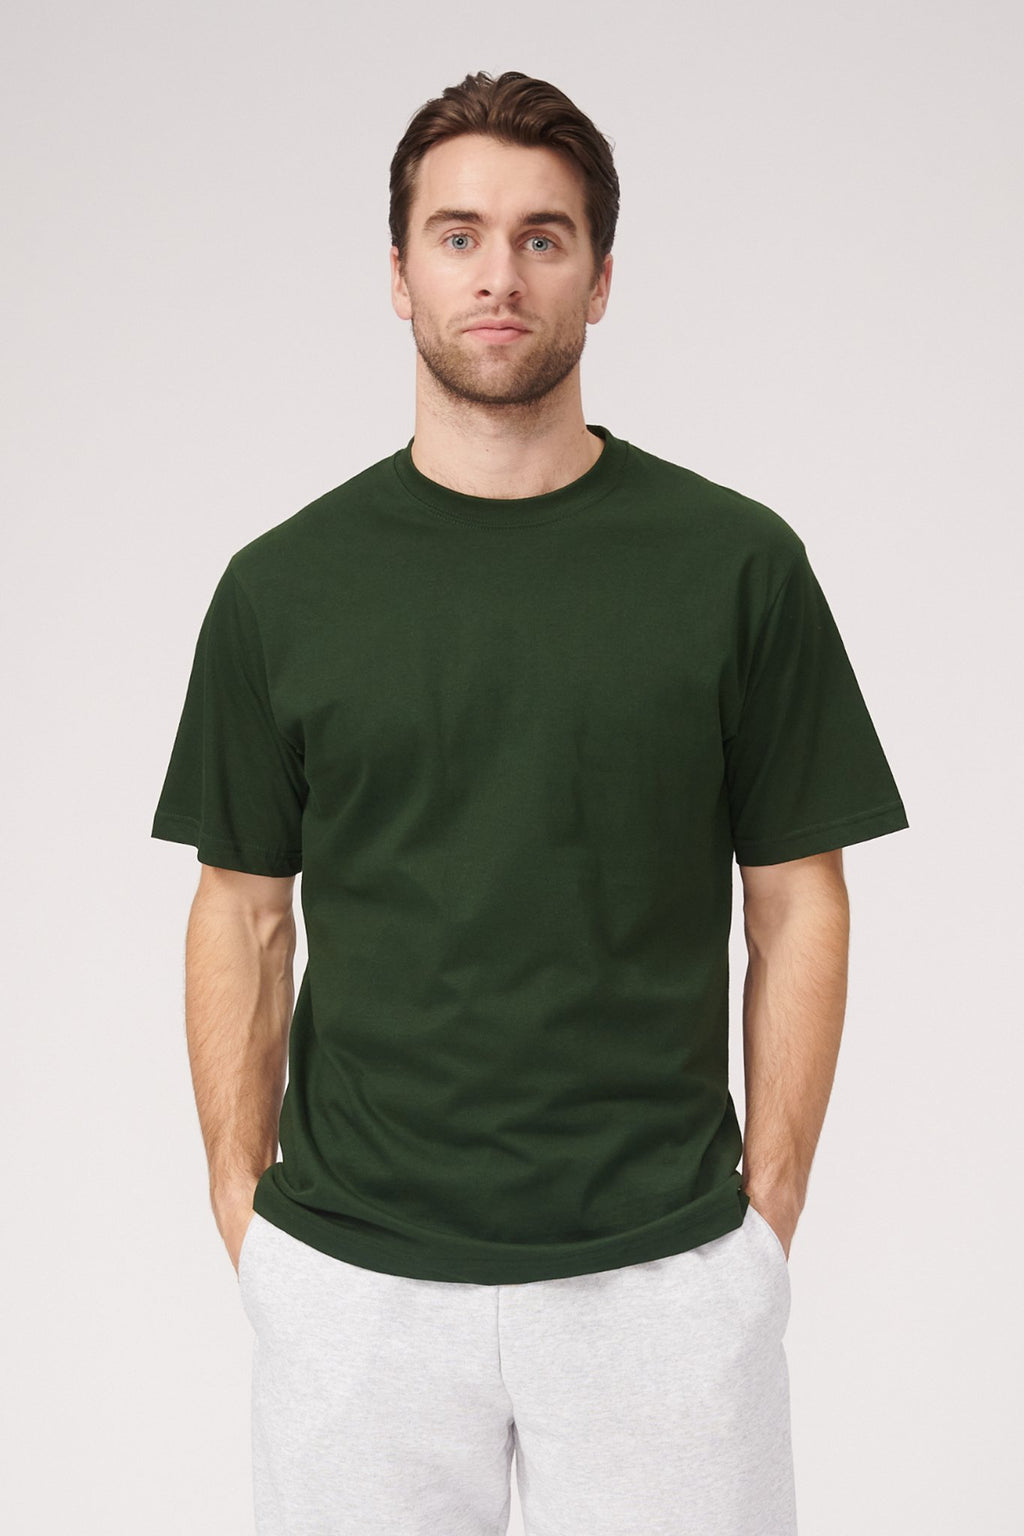 Oversized T-Shirts - Paketangebot (9 Stk.) (FB)